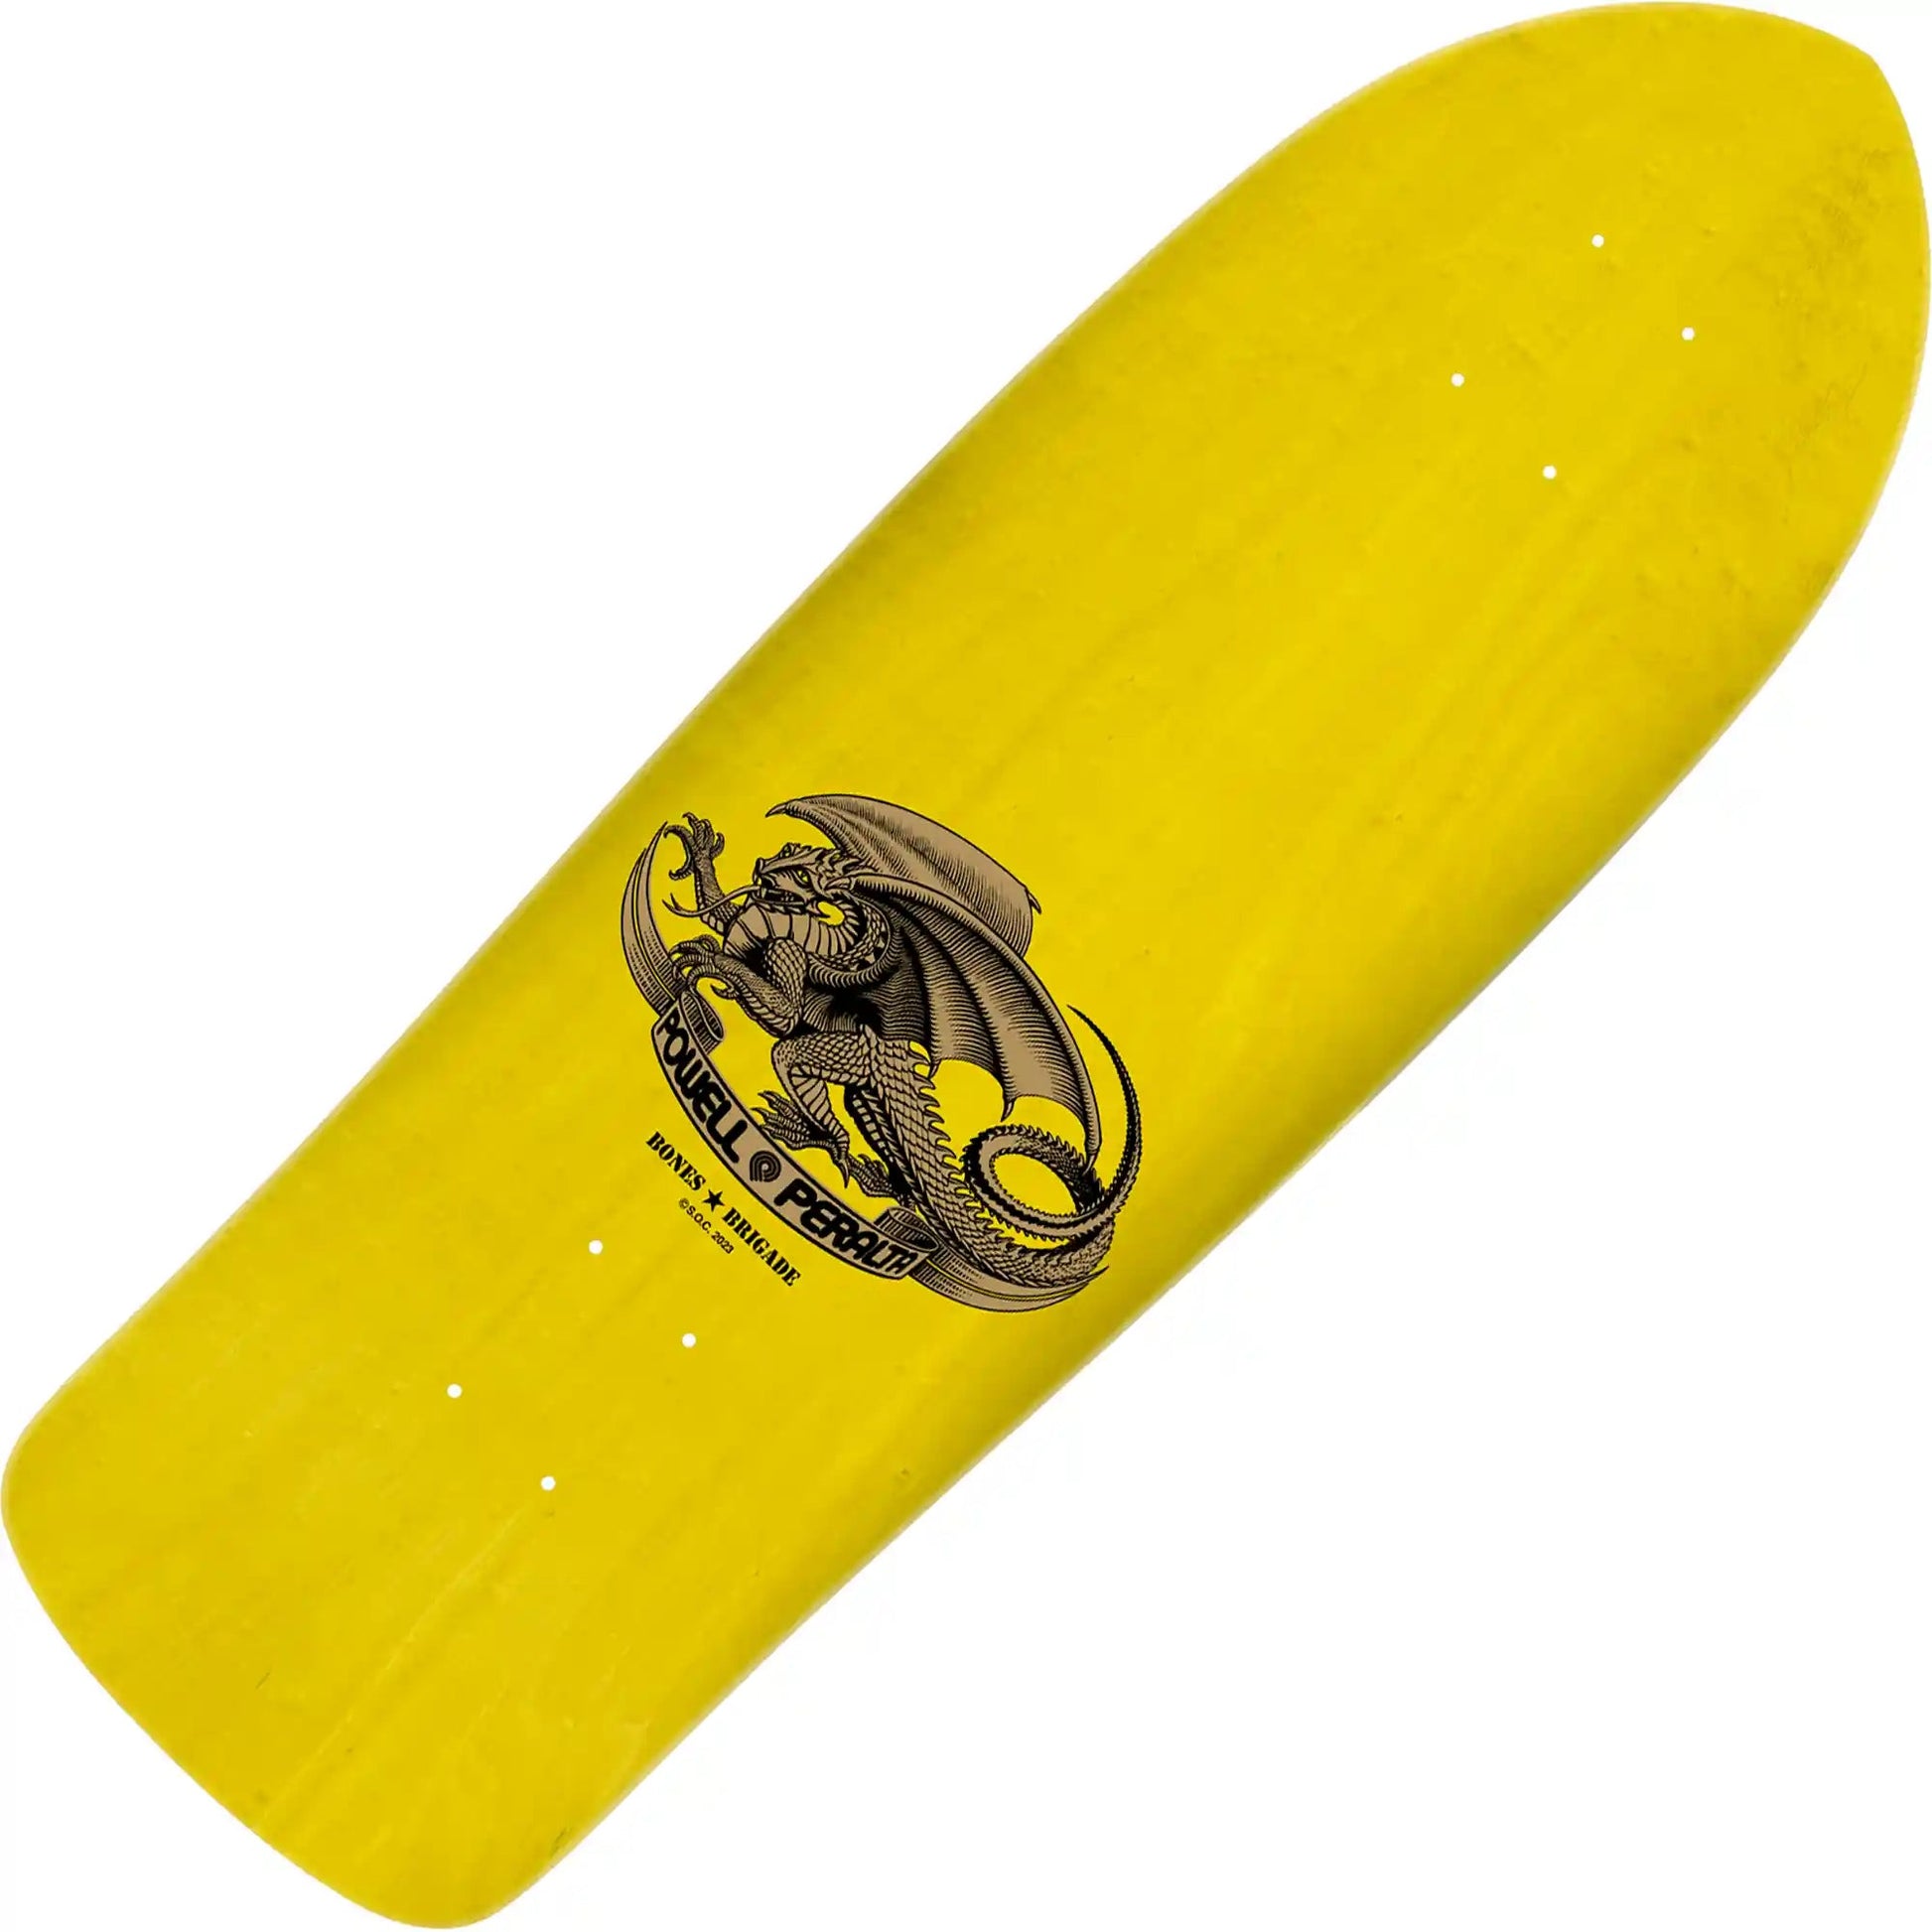 Powell-Peralta Guerrero Series 15 Deck (9.75"), yellow - Tiki Room Skateboards - 2